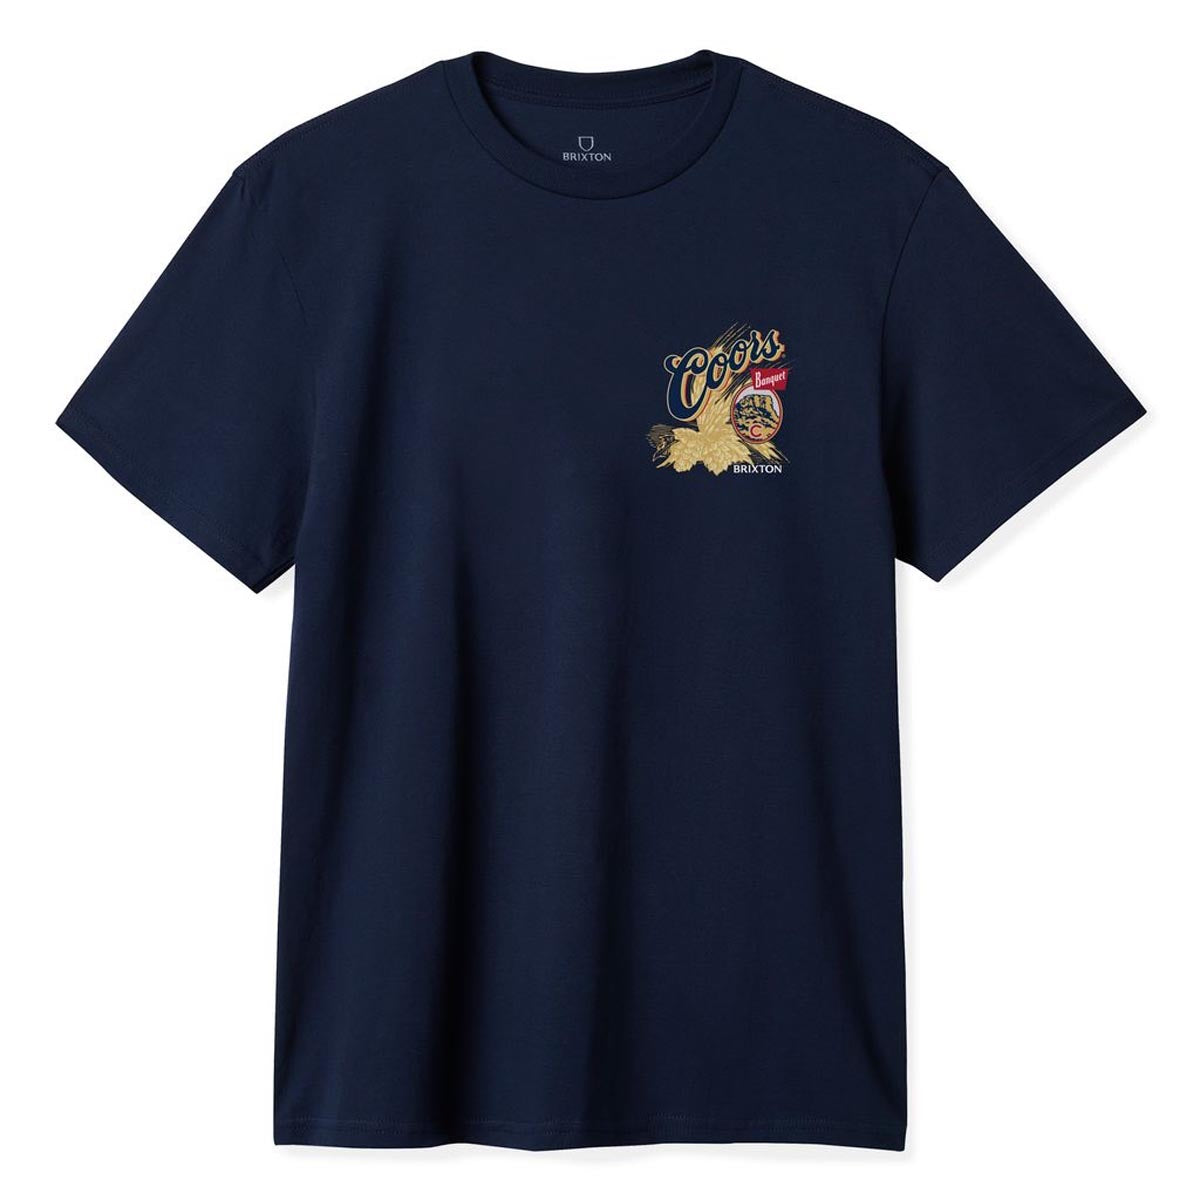 Brixton x Coors Hops T-Shirt - Navy image 2